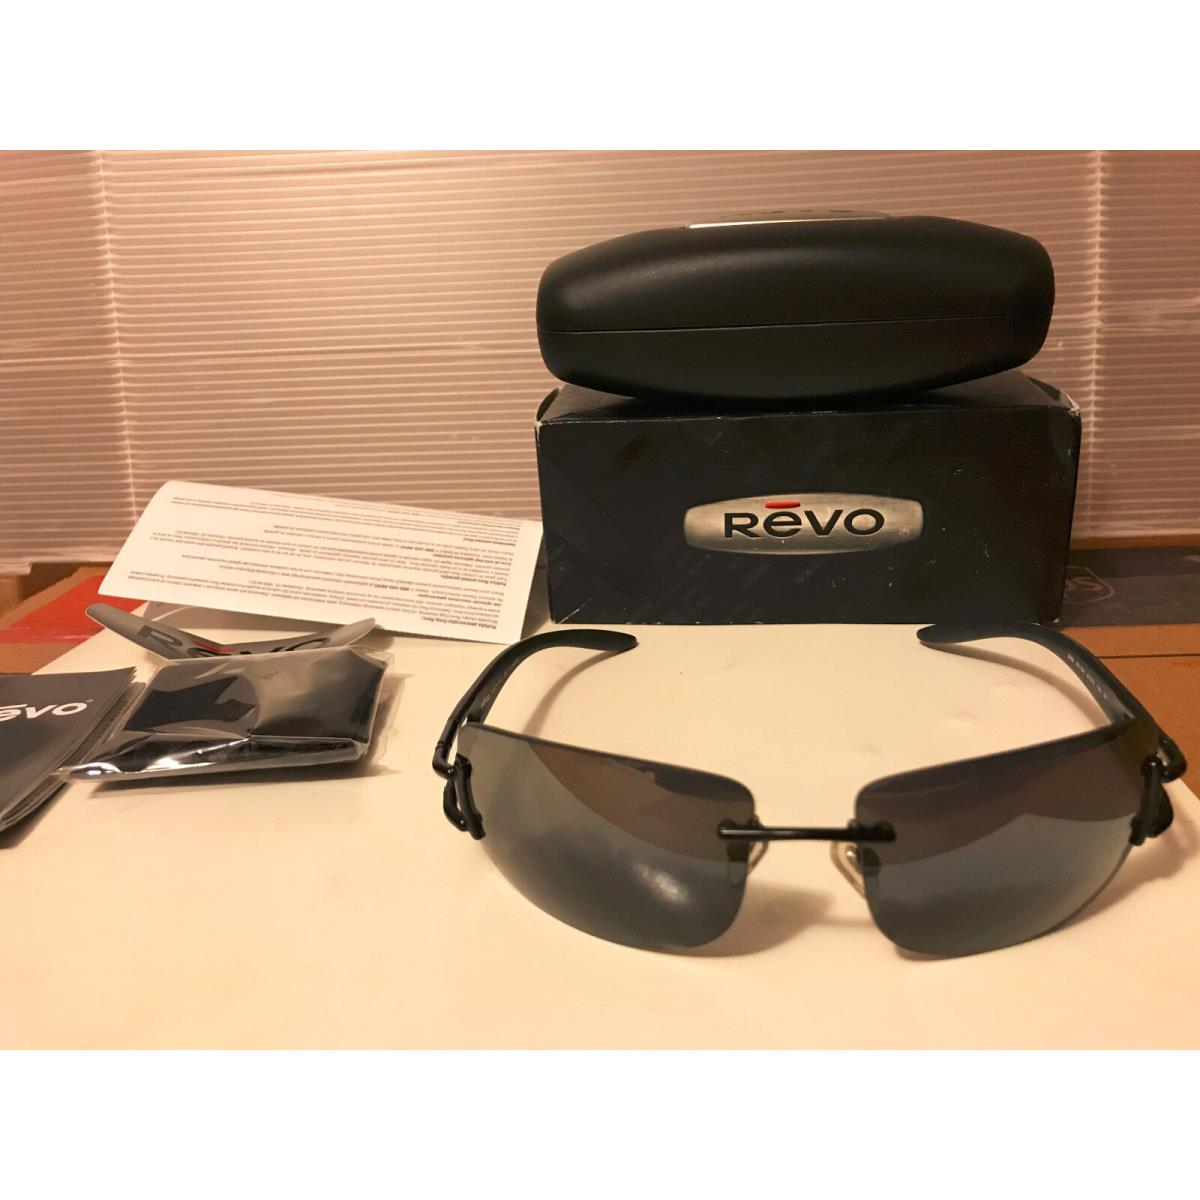 Revo sunglasses  - MATTE BLACK Frame, POLARIZED GREY MIRROR Lens